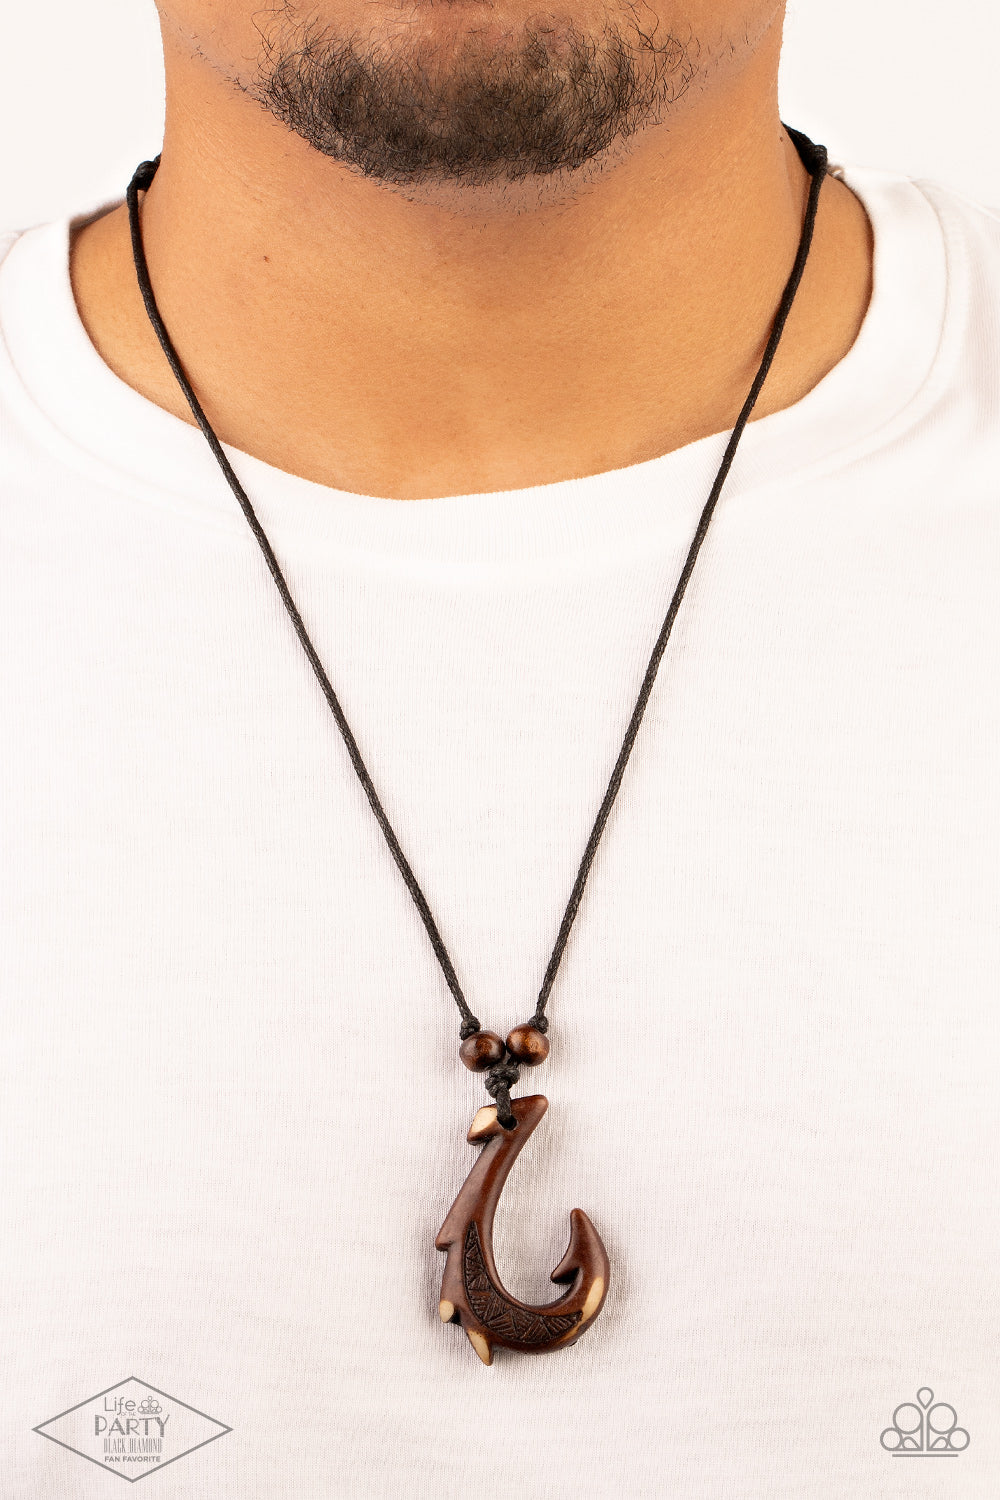 Paparazzi Accessories: Off The Hook - Black Urban Necklace - Black Diamond Fan Favorite